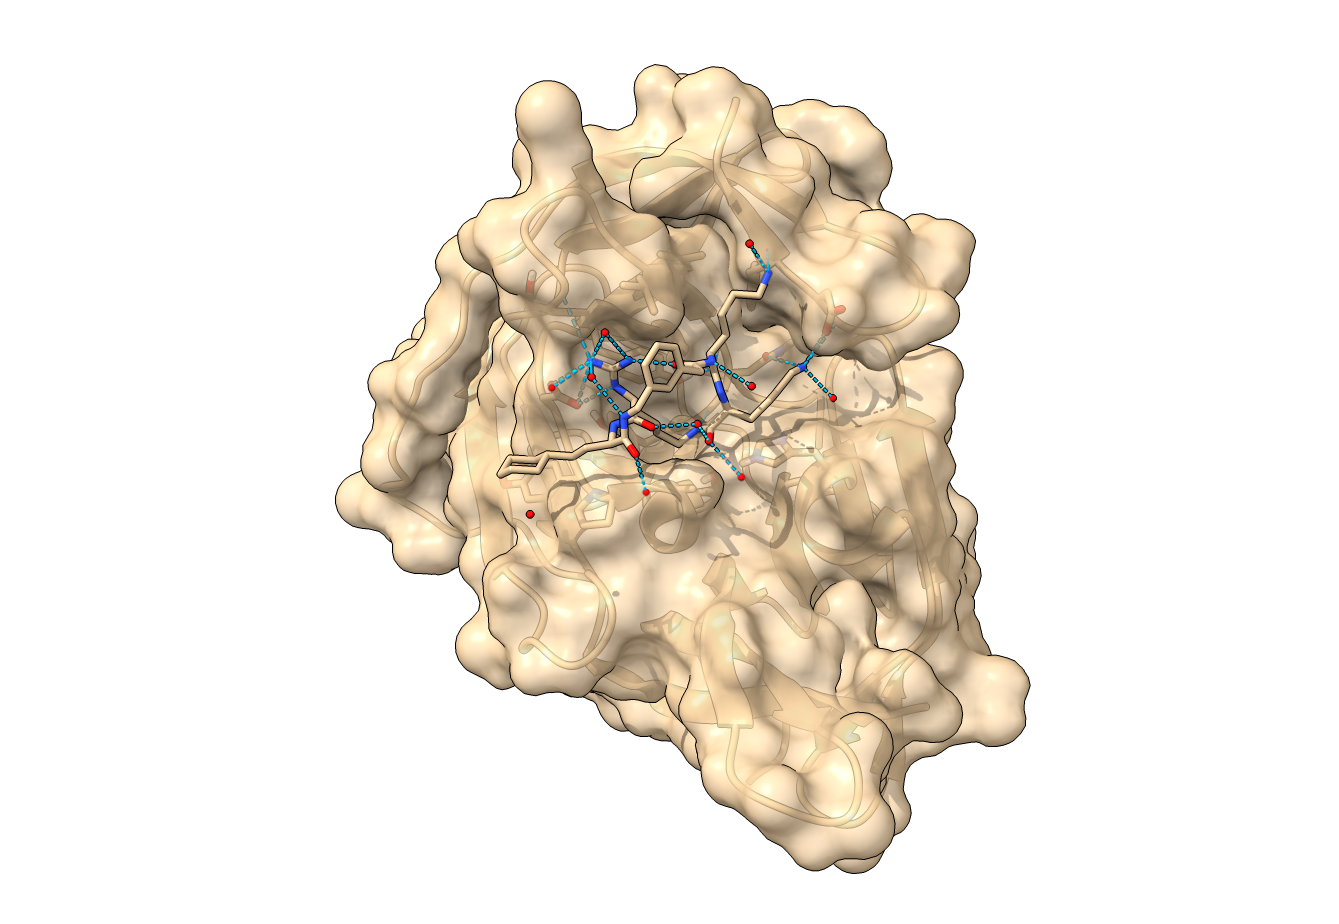 Flavivirus Protease (PDB 7pgc)